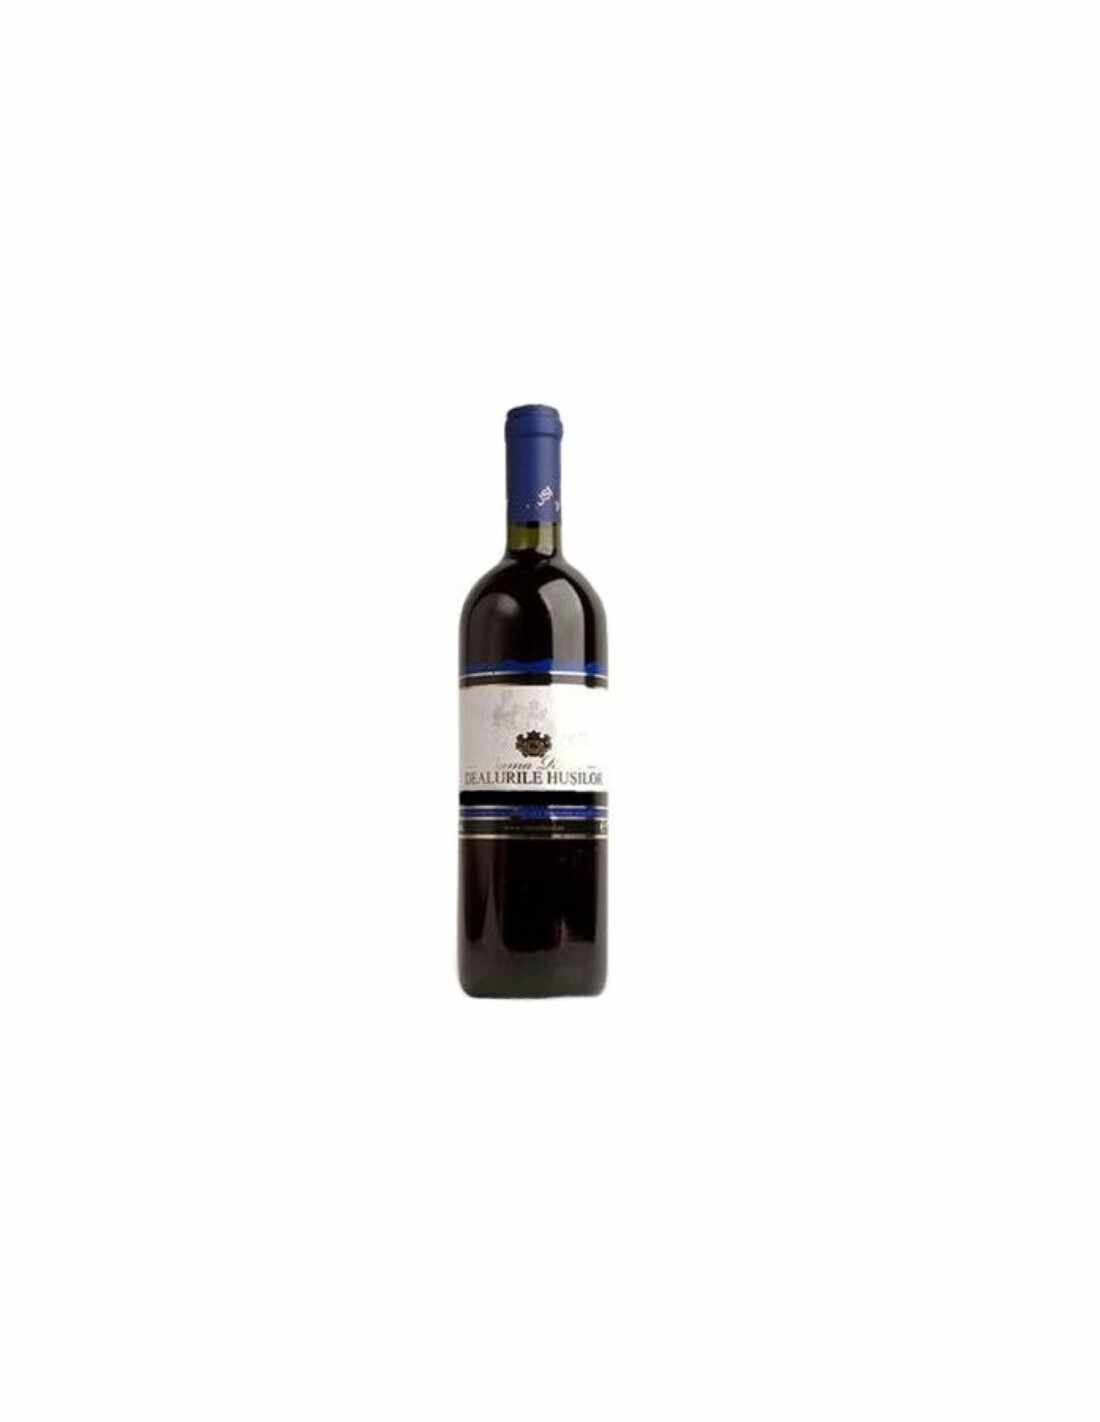 Vin rosu demisec Dealurile Husilor, 0.75L, 10.5% alc., Romania